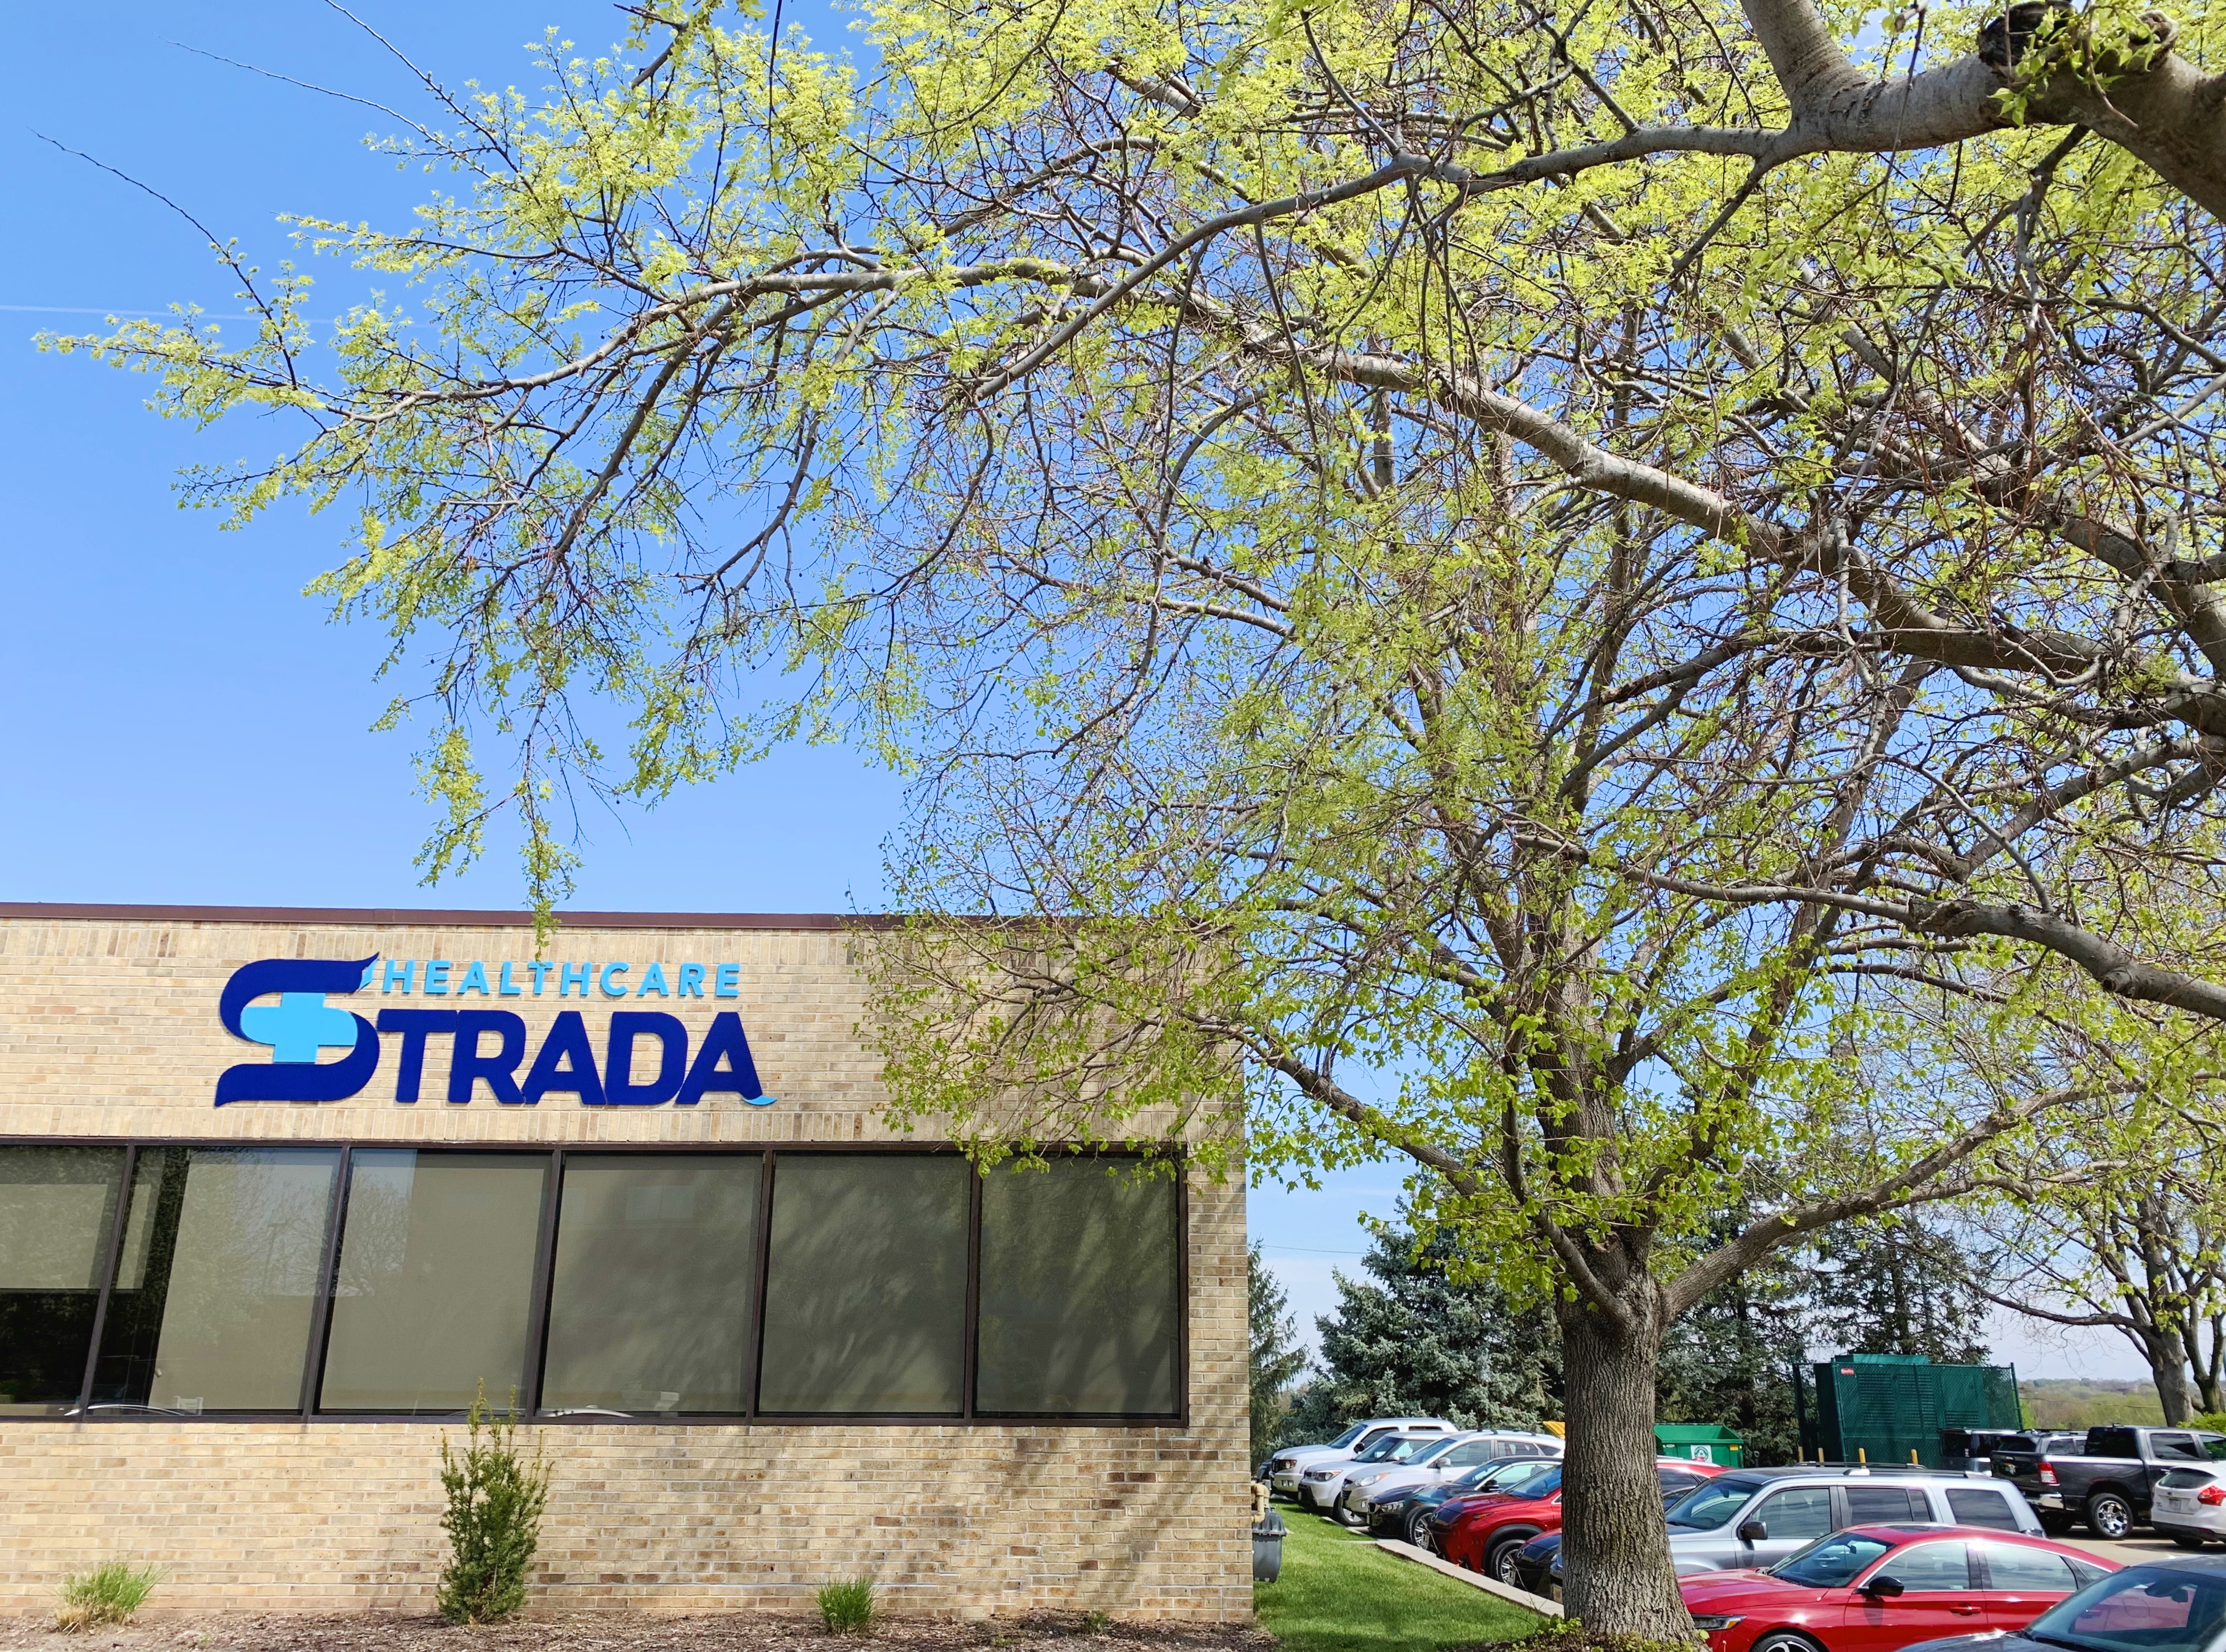 The facade of Strada Healthcare headquarters